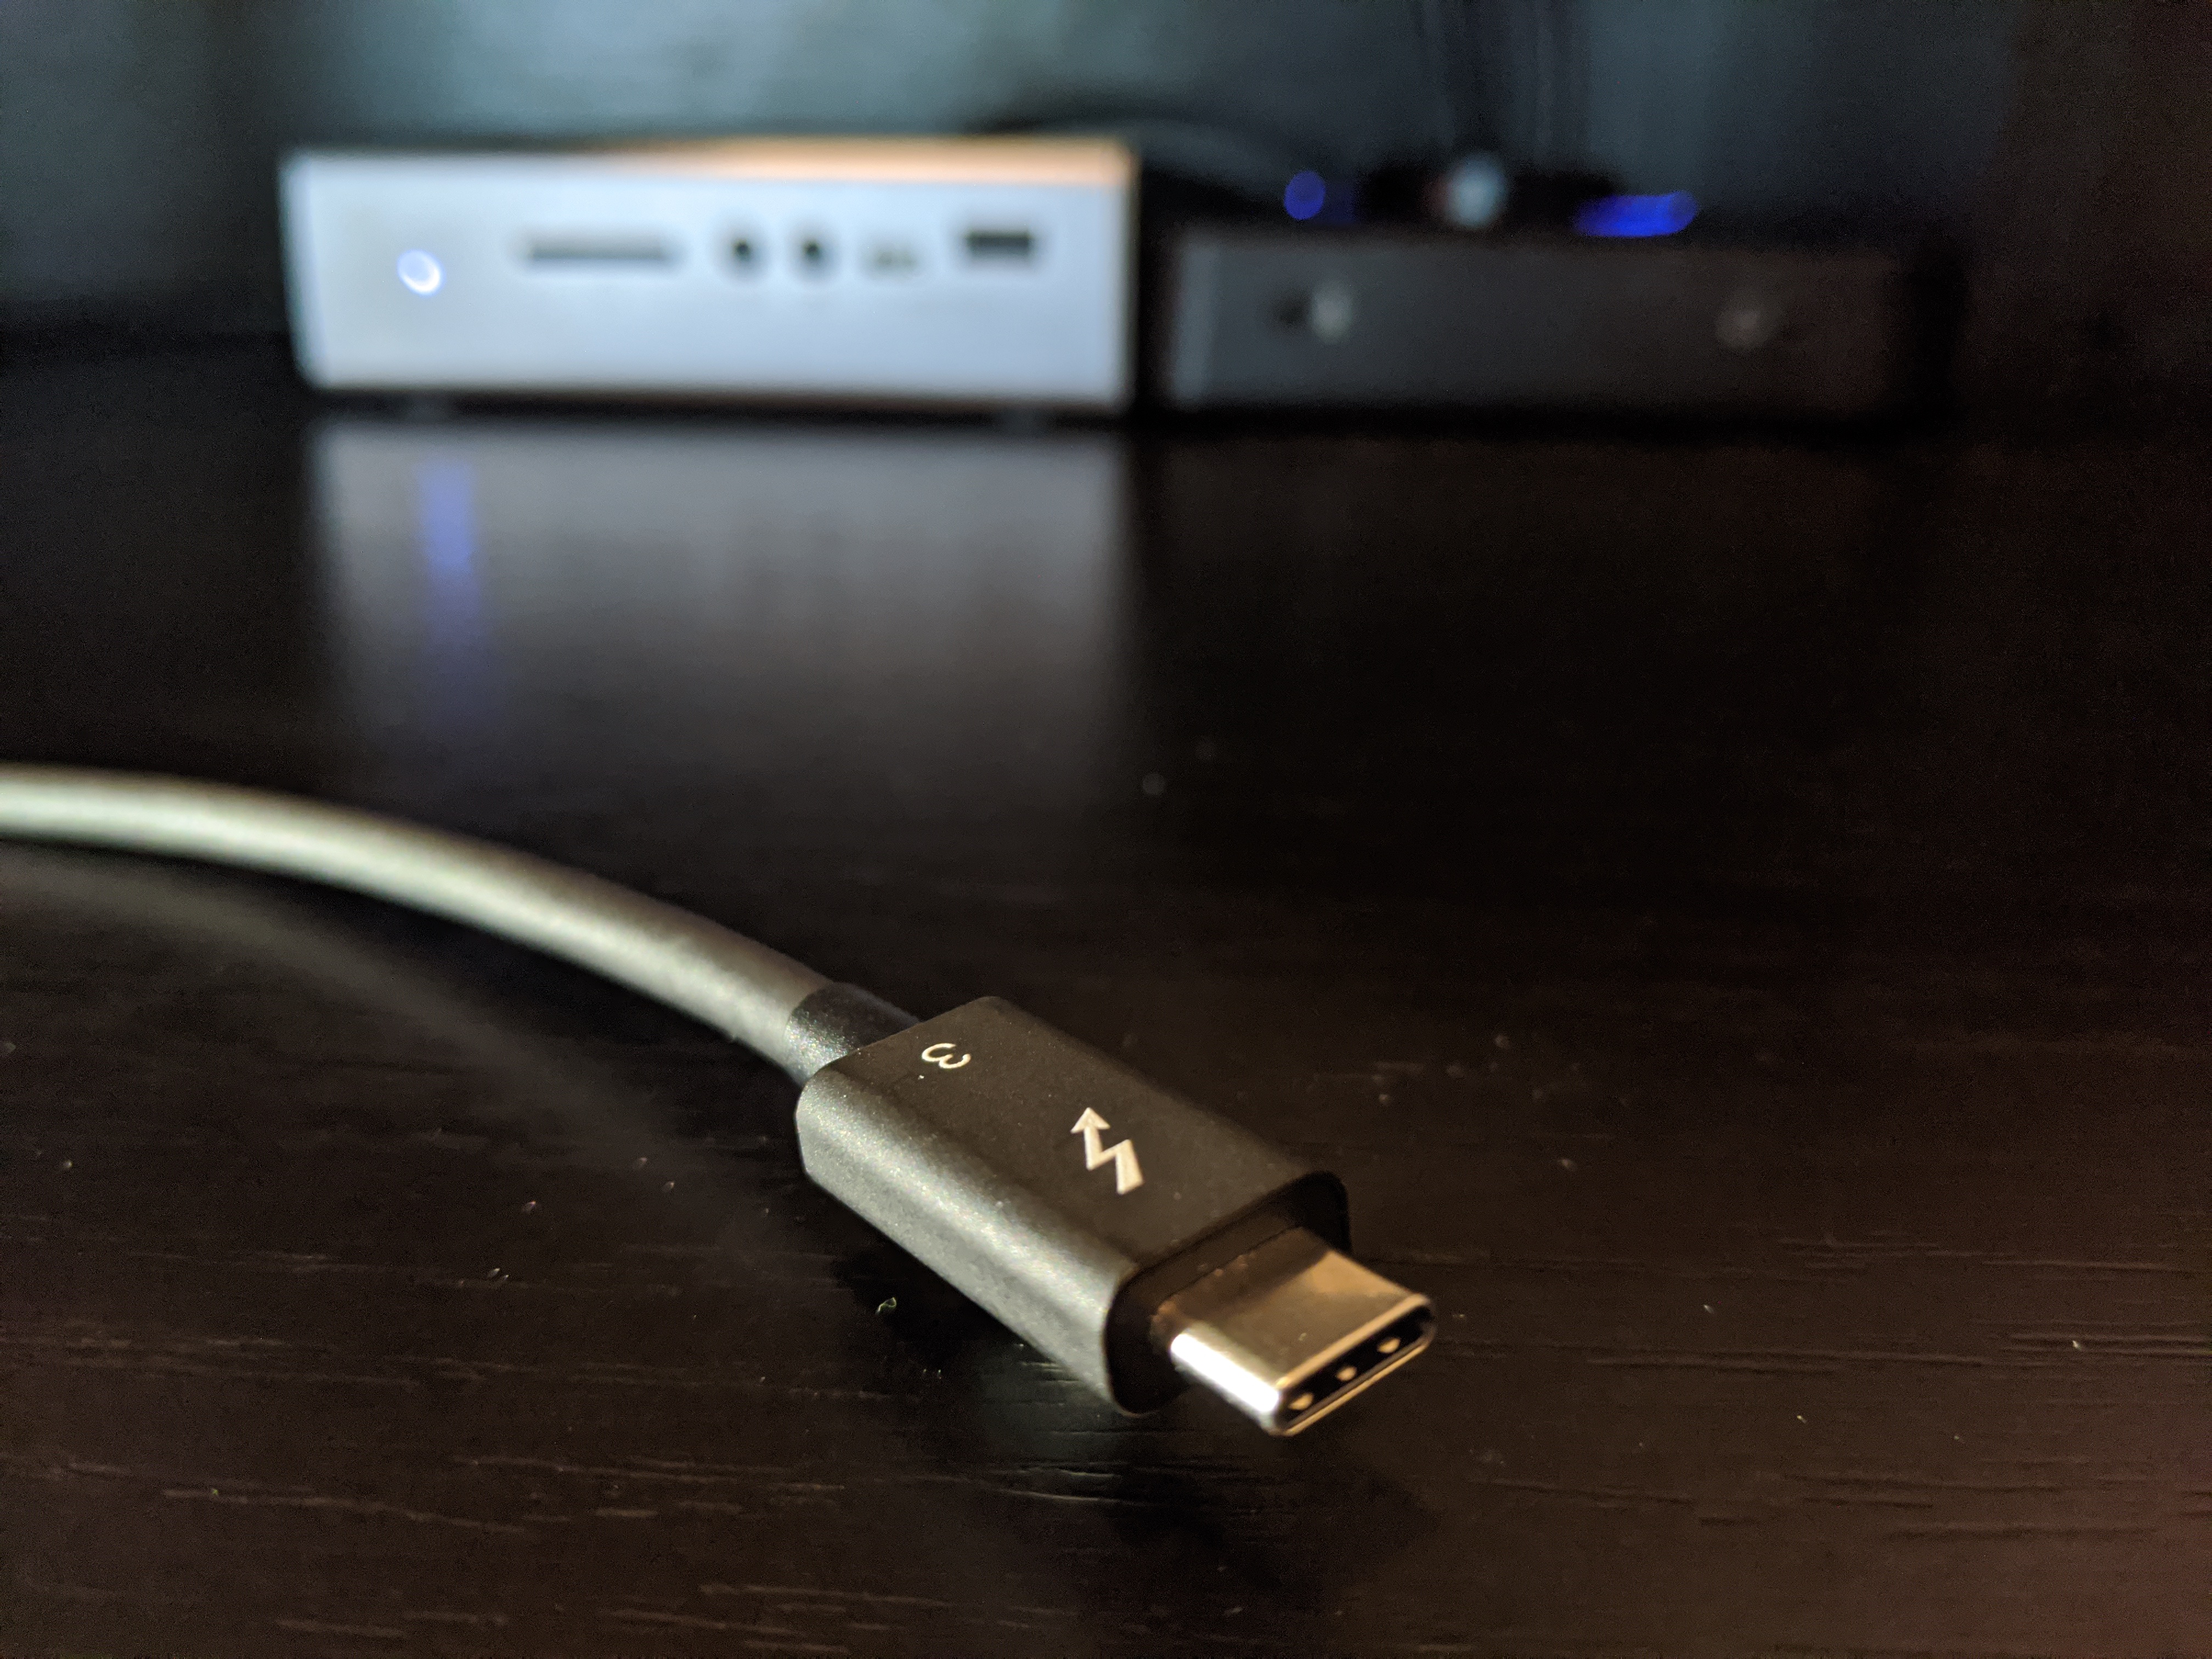 Adaptateur USB-C vers Micro USB - 4,80€